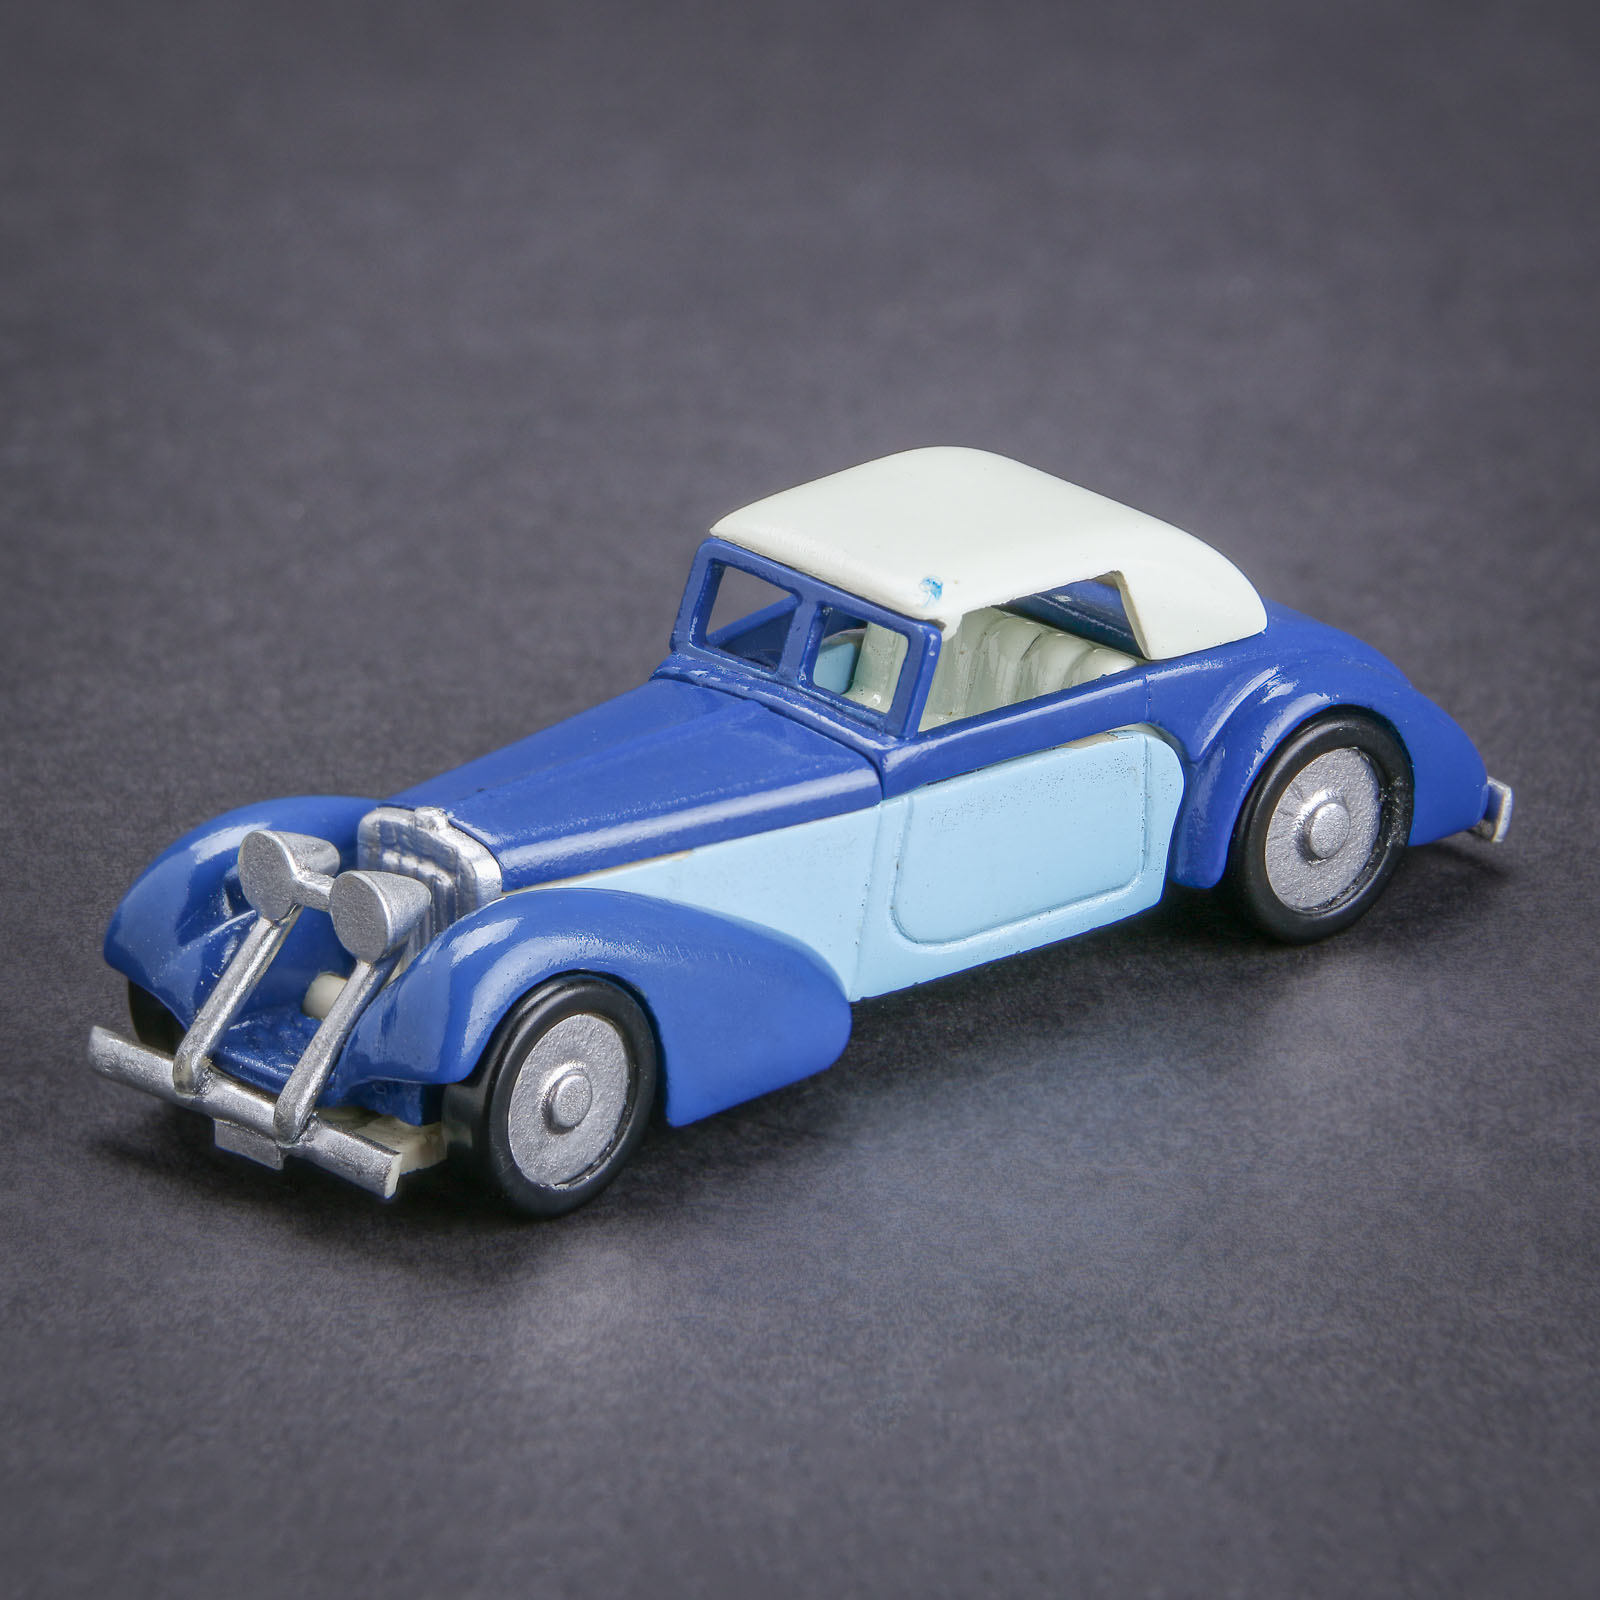 modellauto bugatti blau weiss 01